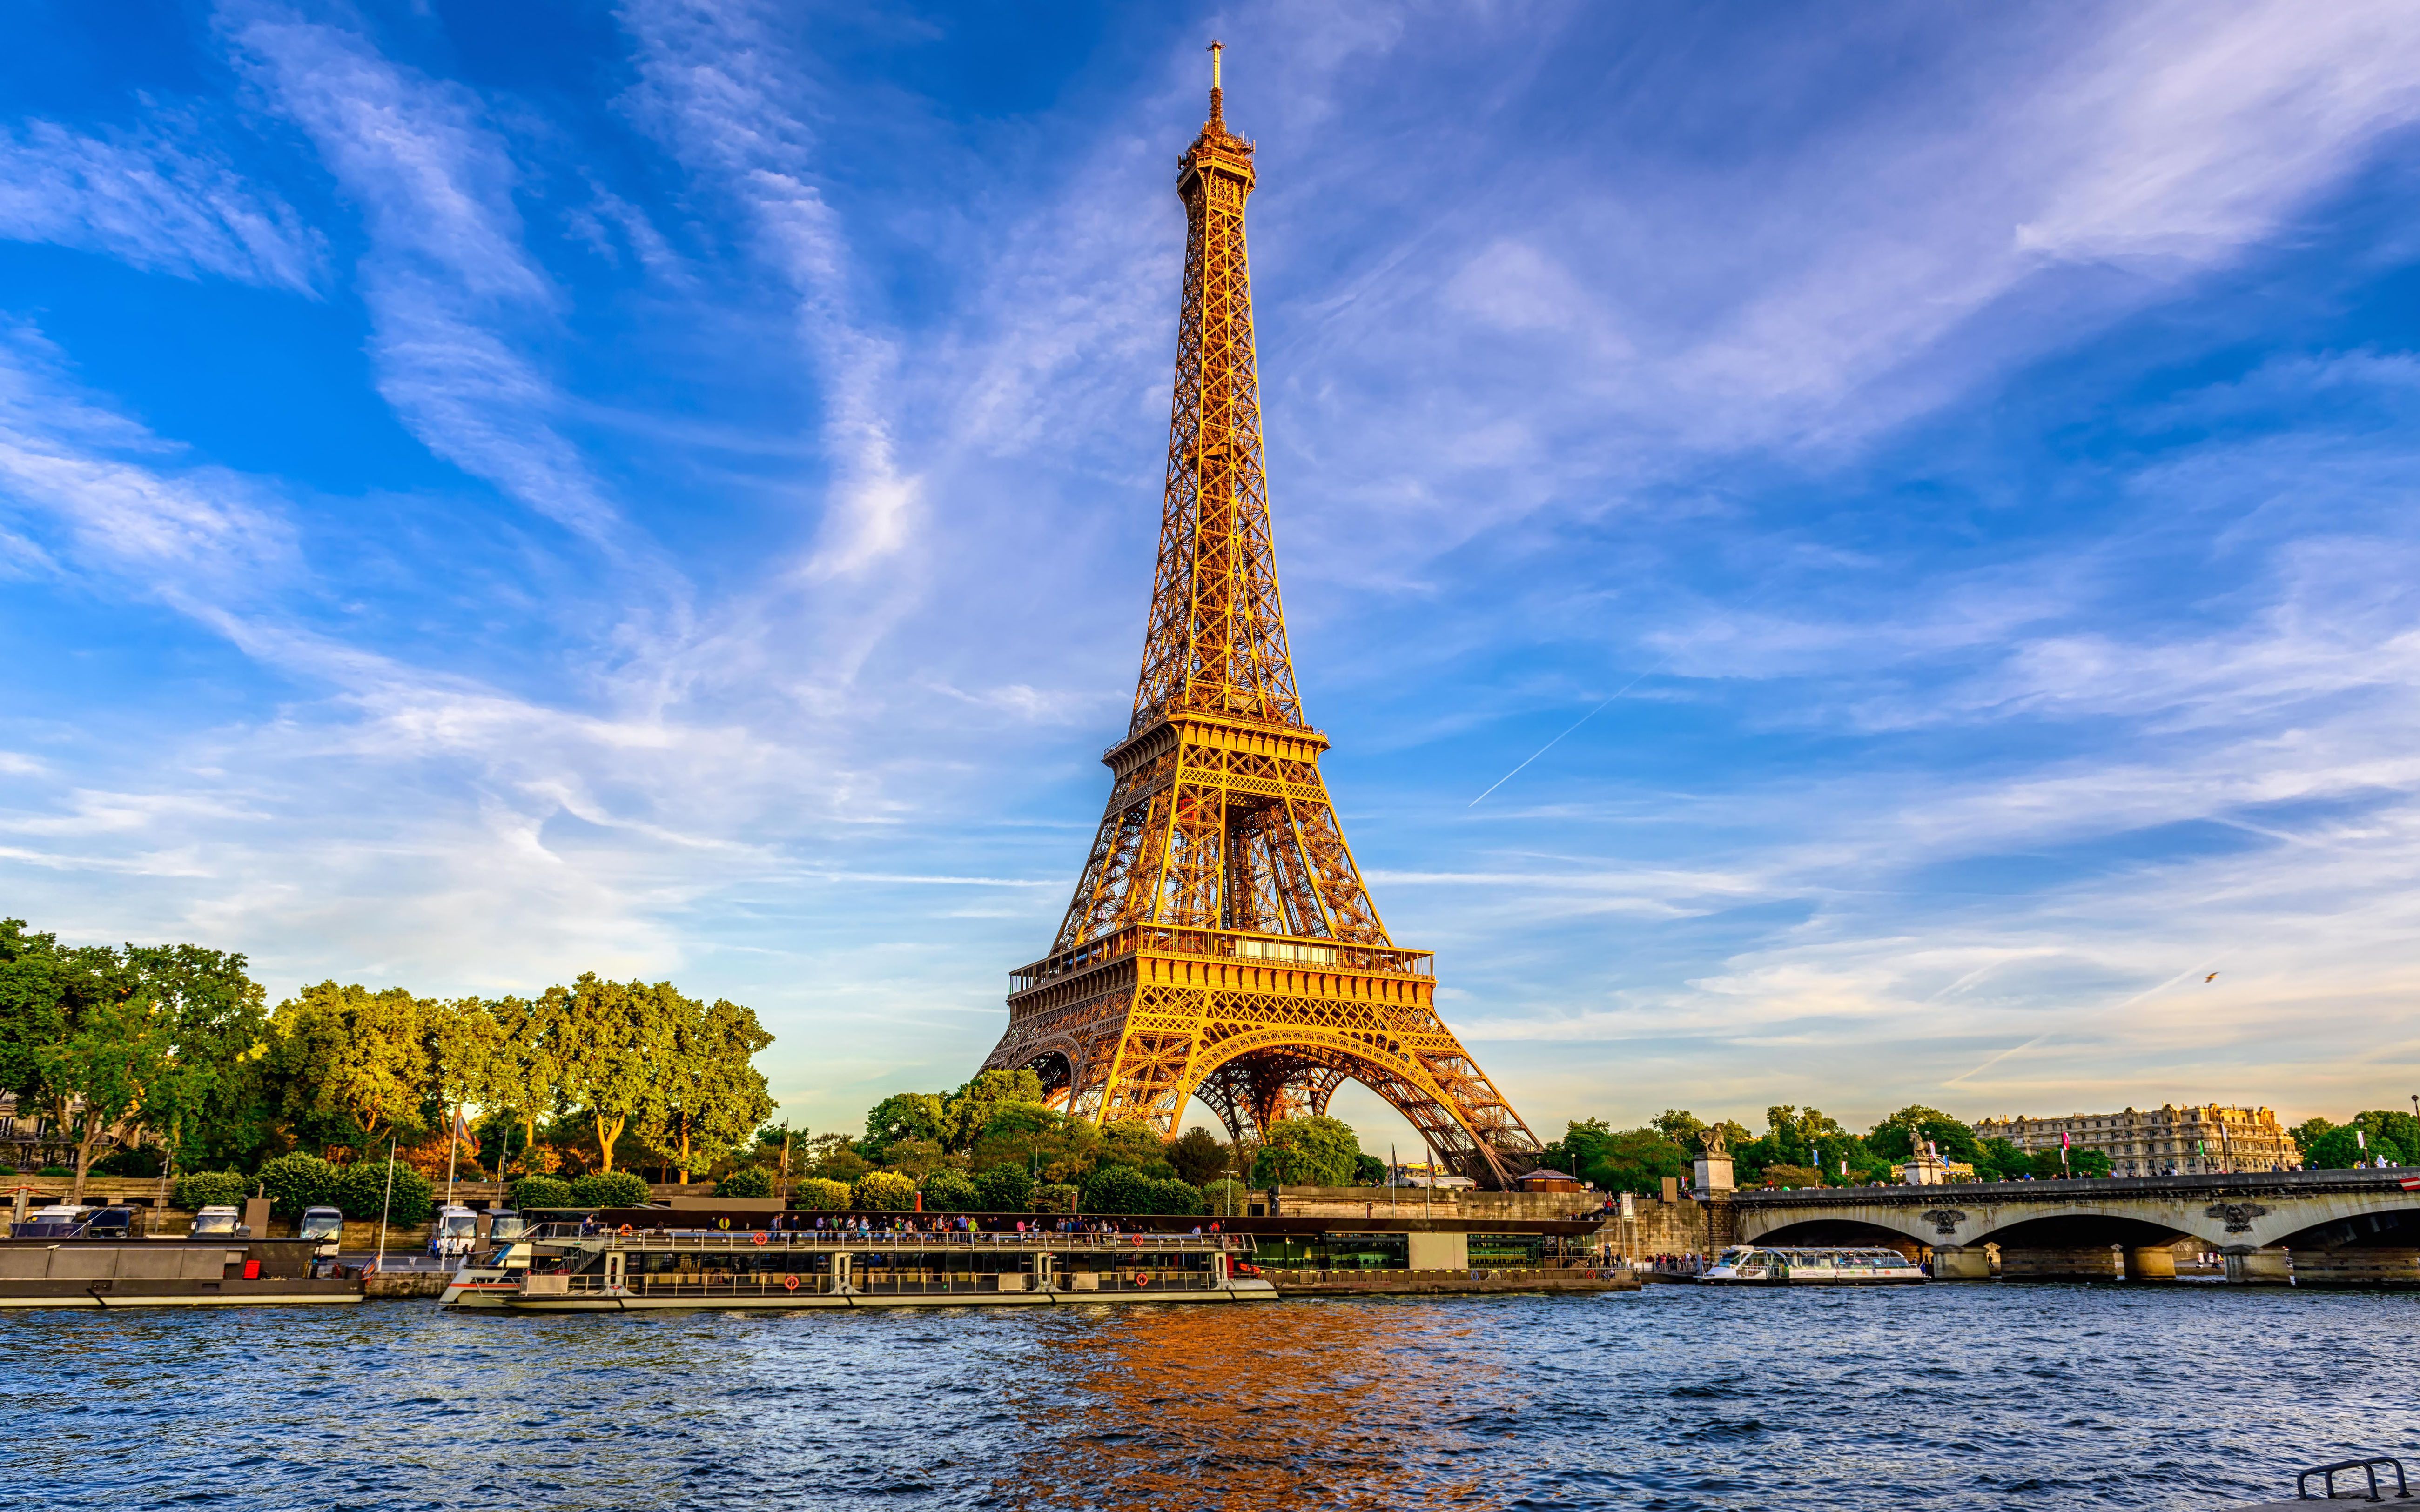 European Cities Eiffel Tower And River Seine Paris France 4k Ultra HD Wallpaper For Desktop Laptop Tablet Mobile Phones And Tv 5200х3250, Wallpaper13.com